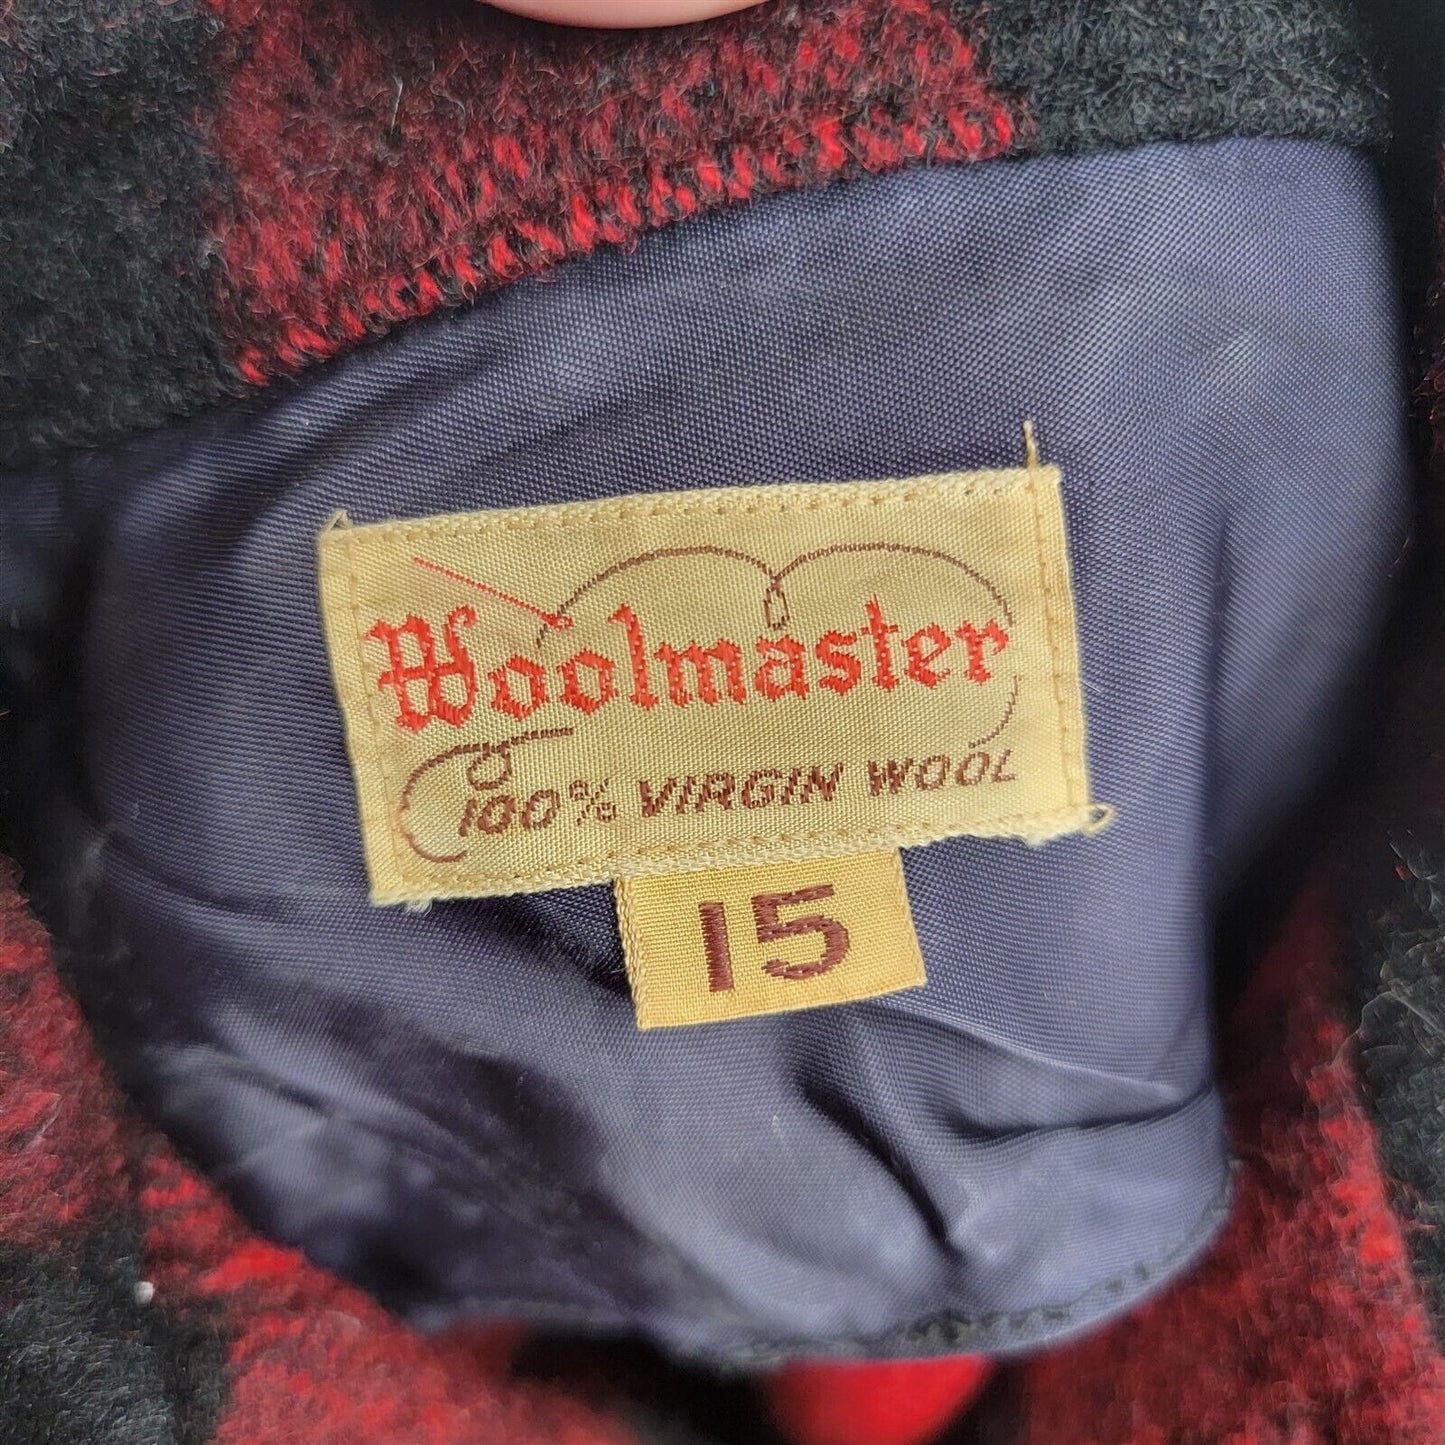 Vintage Woolmaster Red & Black Plaid Flannel Shirt Jacket Shacket